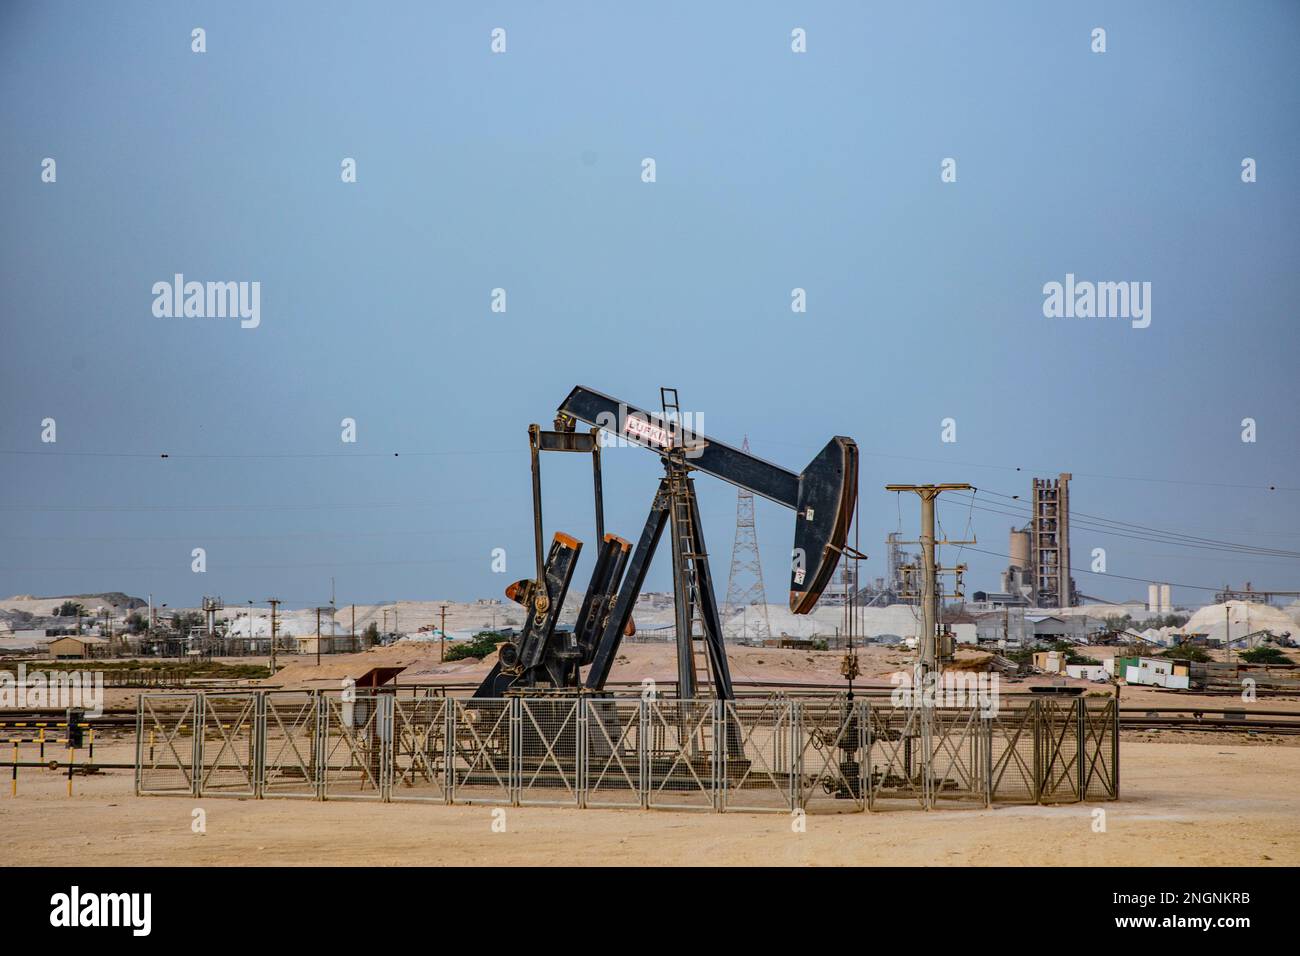 Pumpjack aka oil horse, nodding donkey, oil jack, beam pump raises crude oil in the Bahrain desert at Sakhir on the Persian Gulf. Stock Photo